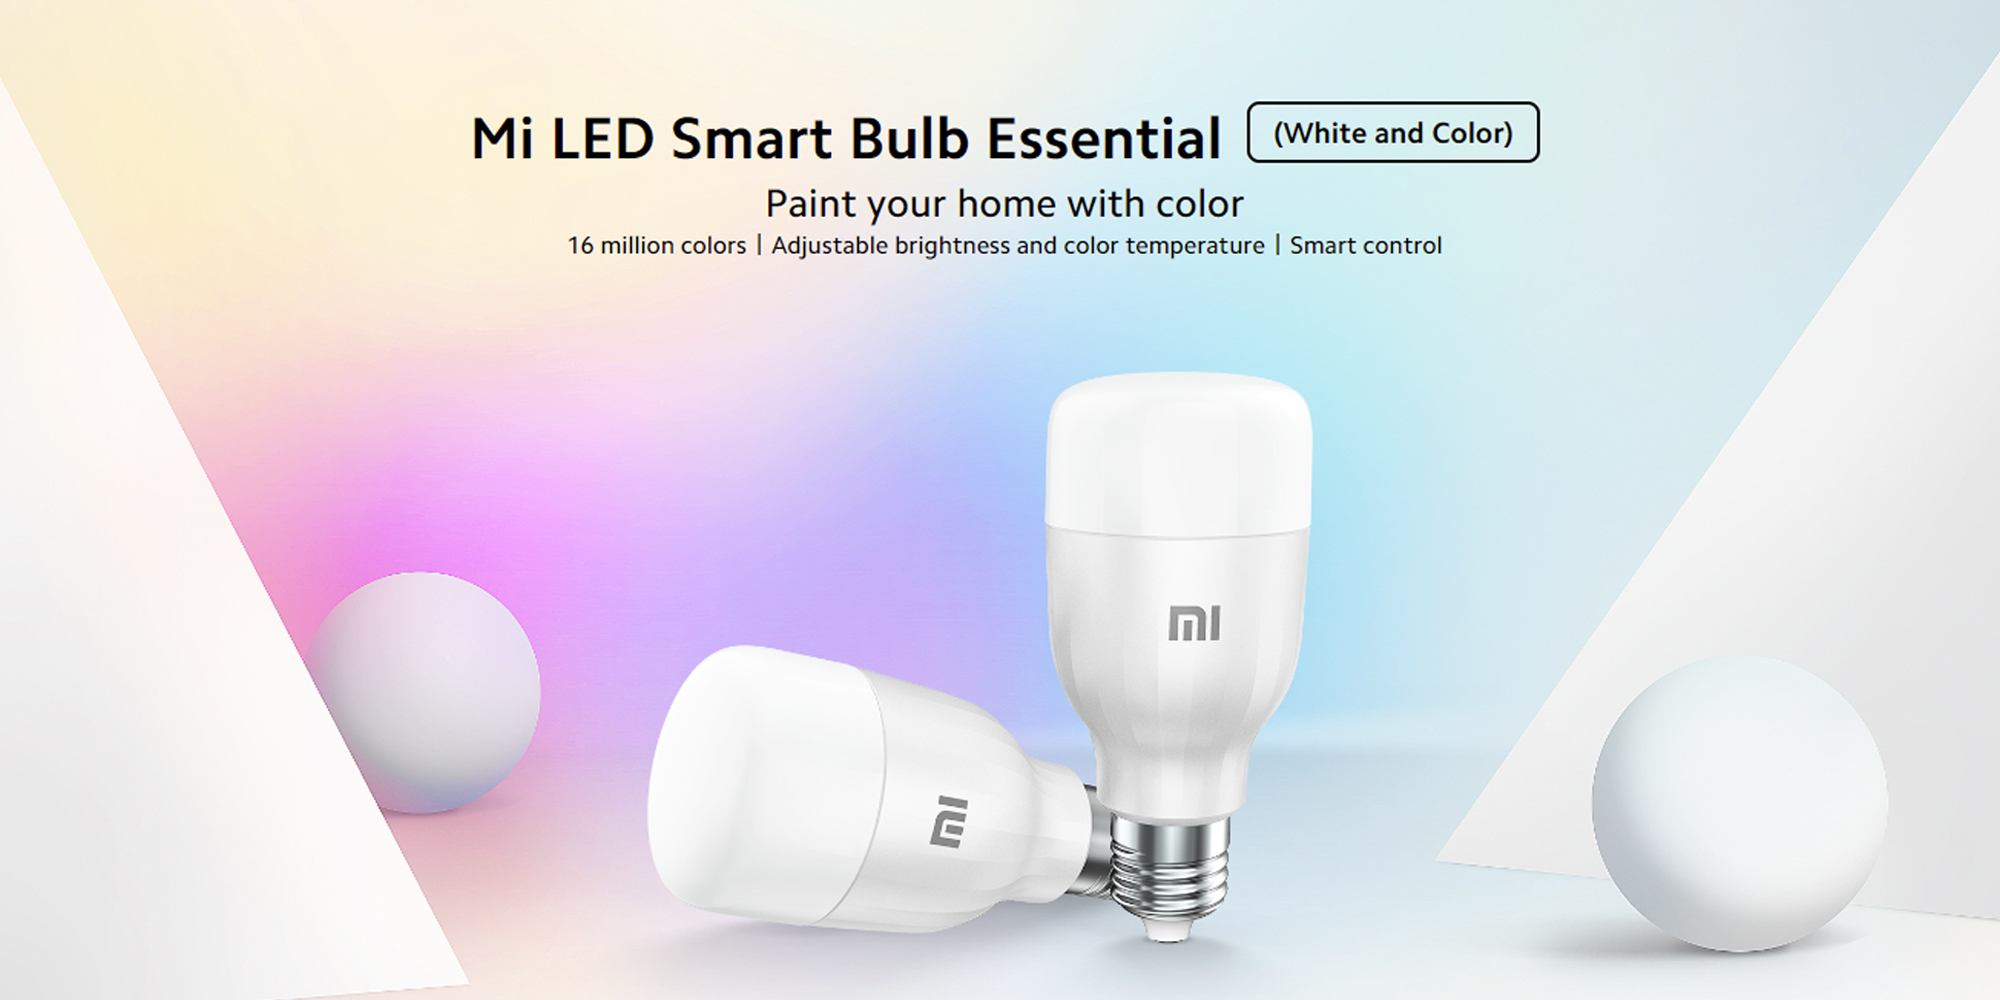 Mi LED Smart Bulb Essential:(White and Color) Wi-Fi, Smart Control, Energy Saving